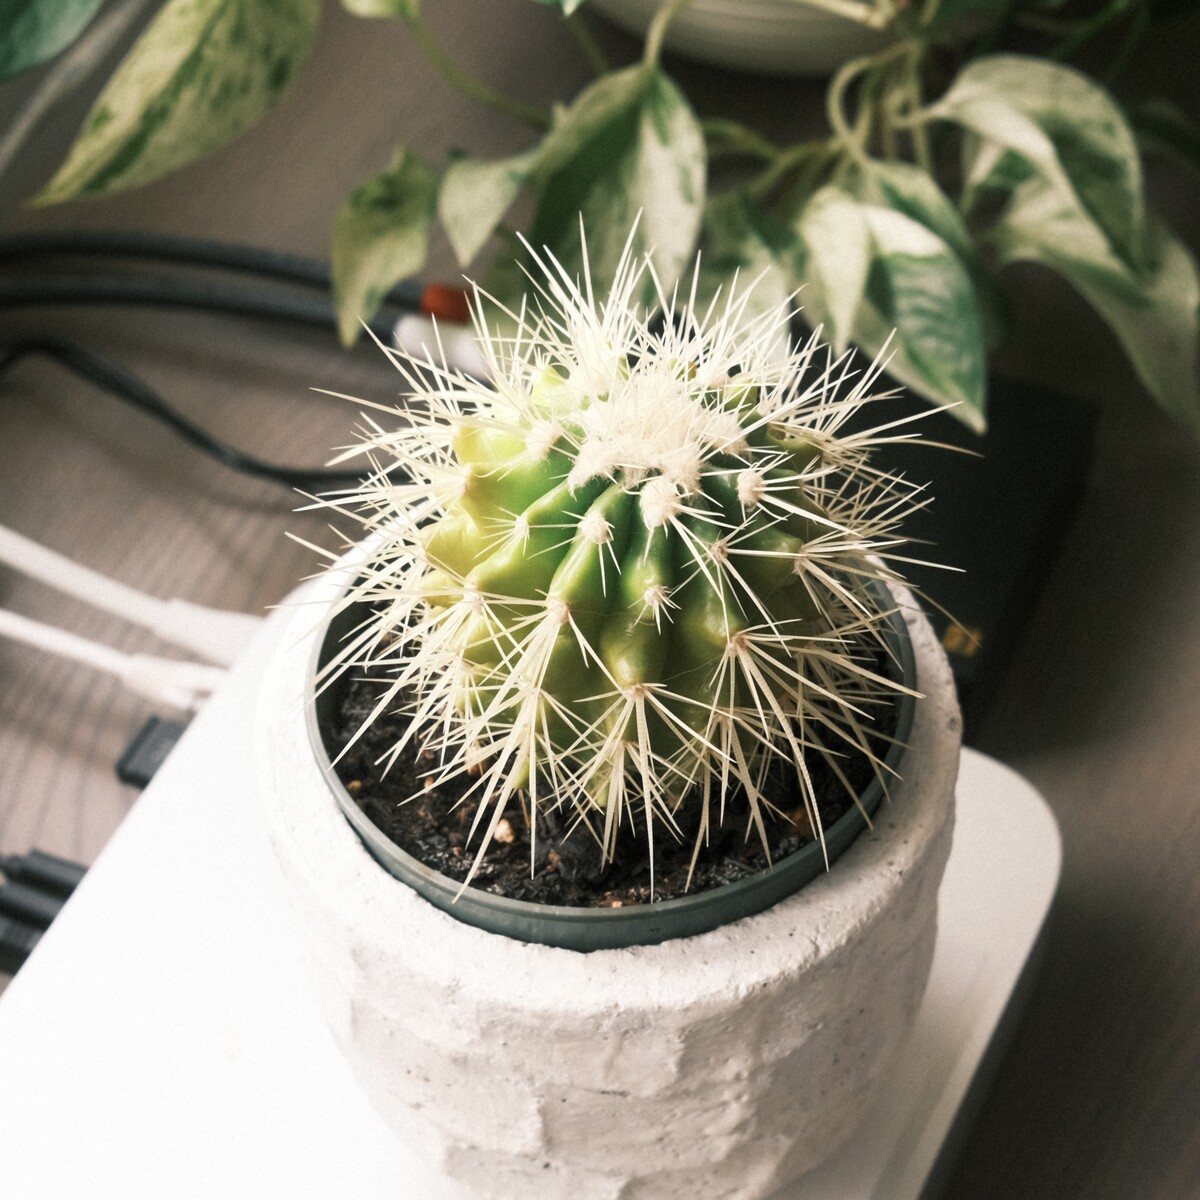 A ball cactus on a desk.